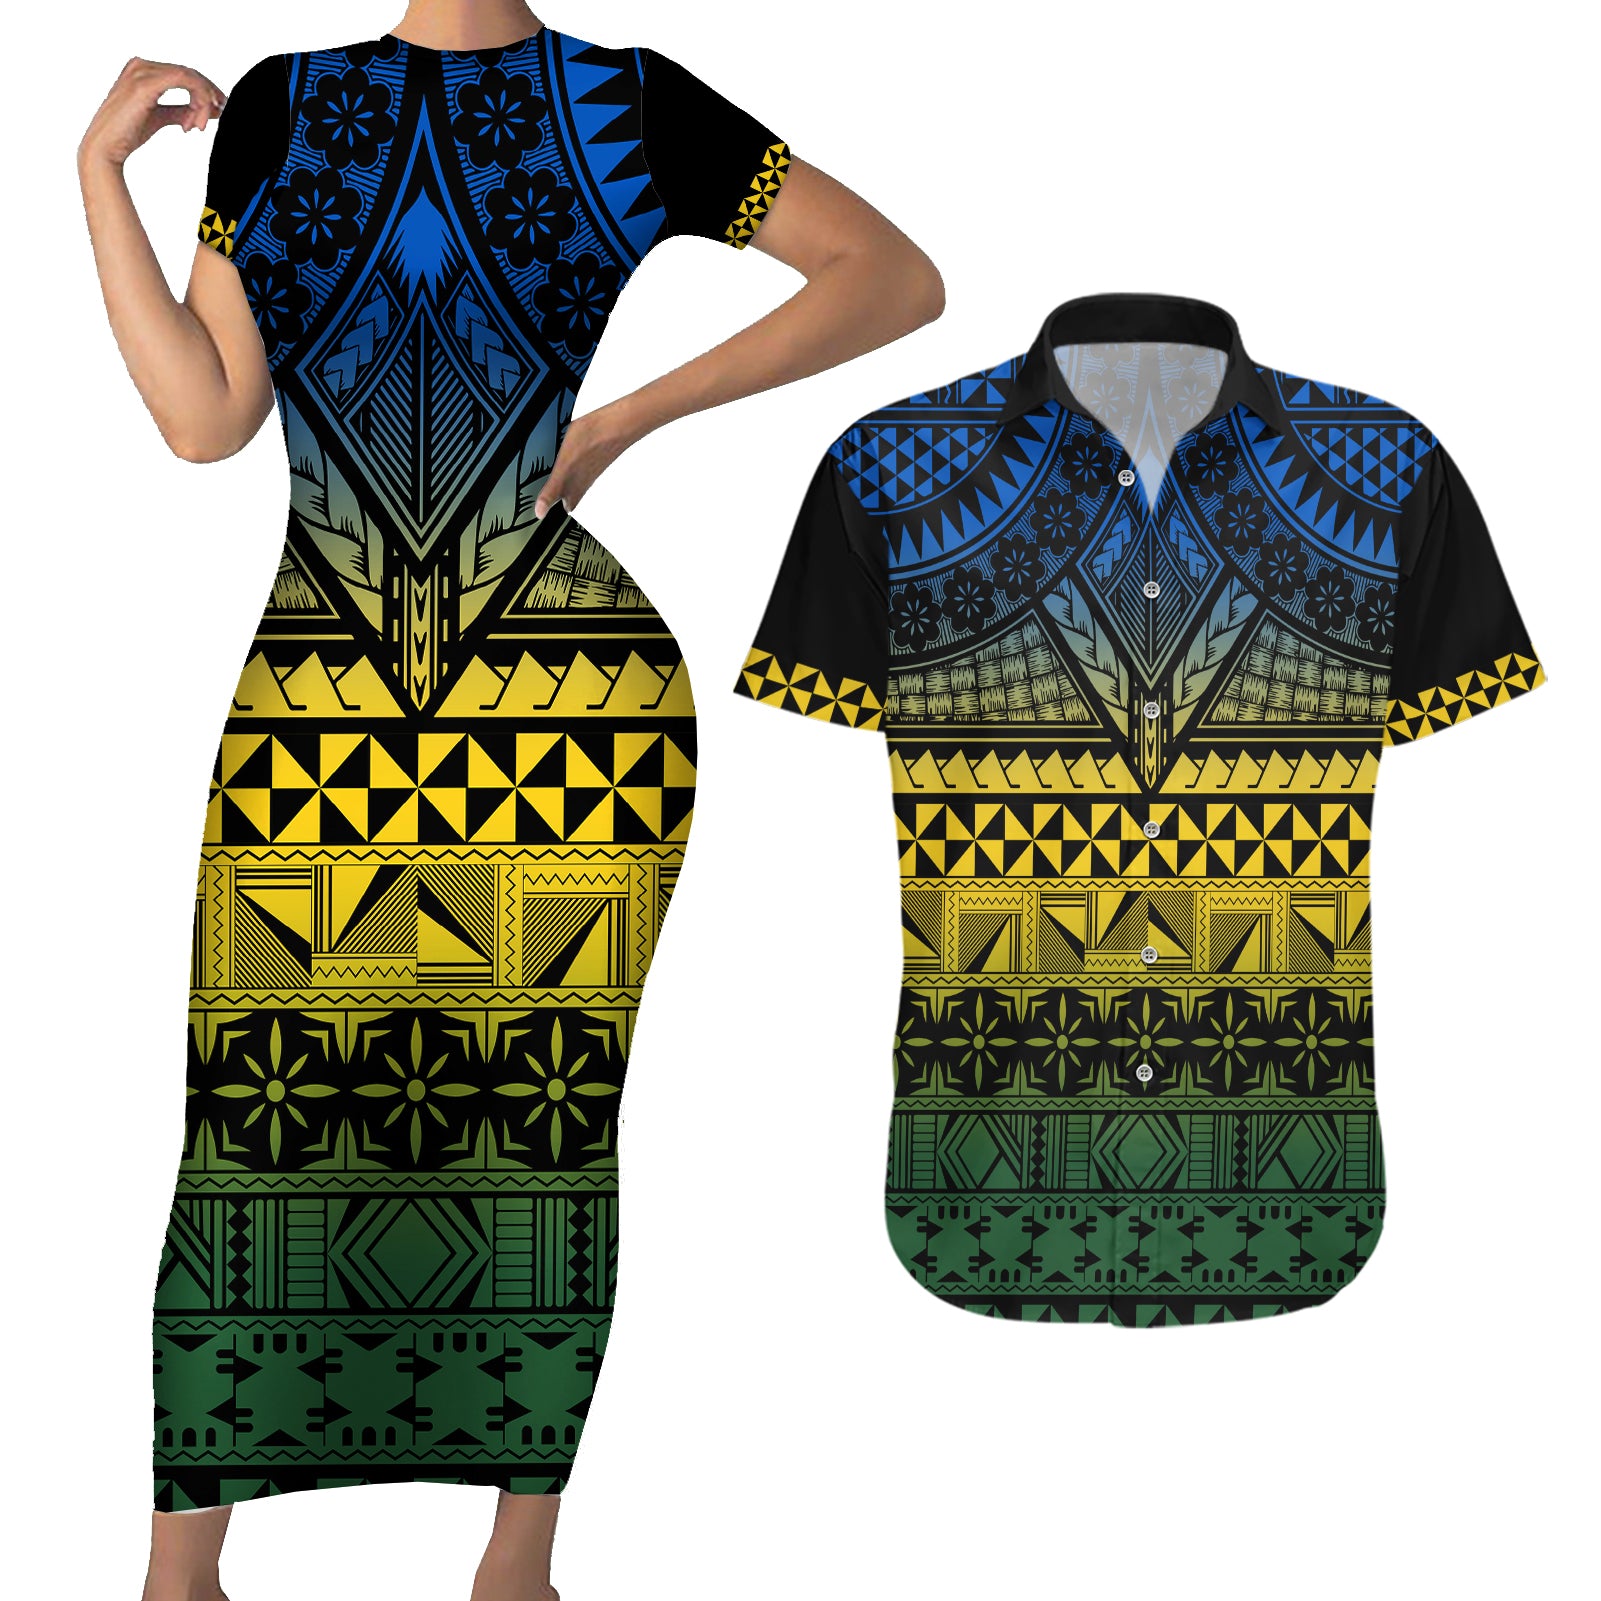 Halo Olaketa Solomon Islands Couples Matching Short Sleeve Bodycon Dress and Hawaiian Shirt Melanesian Tribal Pattern Gradient Version LT14 Black - Polynesian Pride